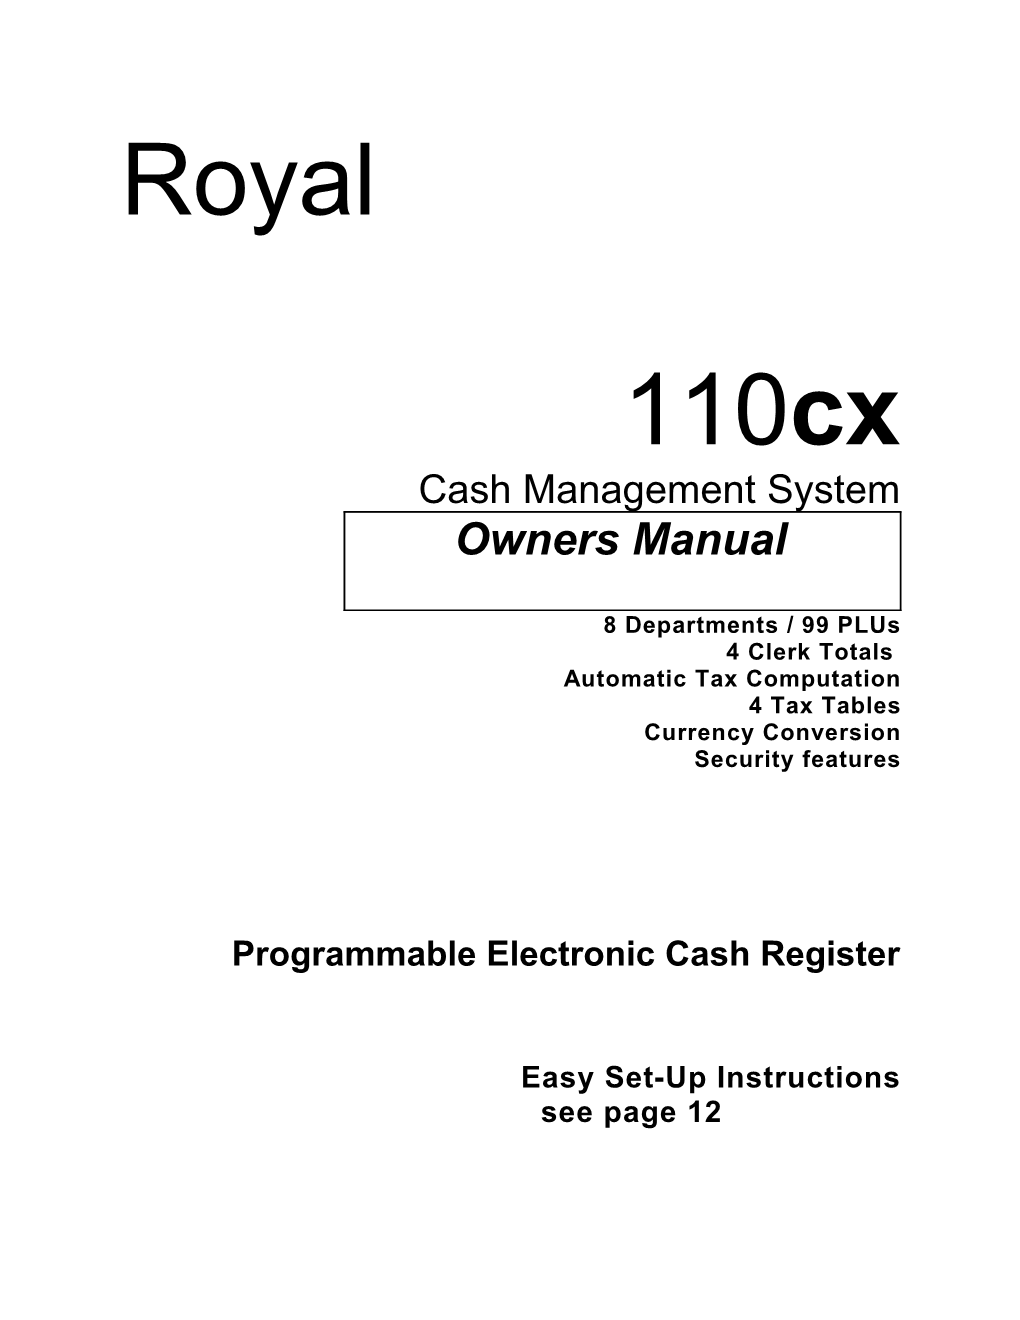 Cash Management System